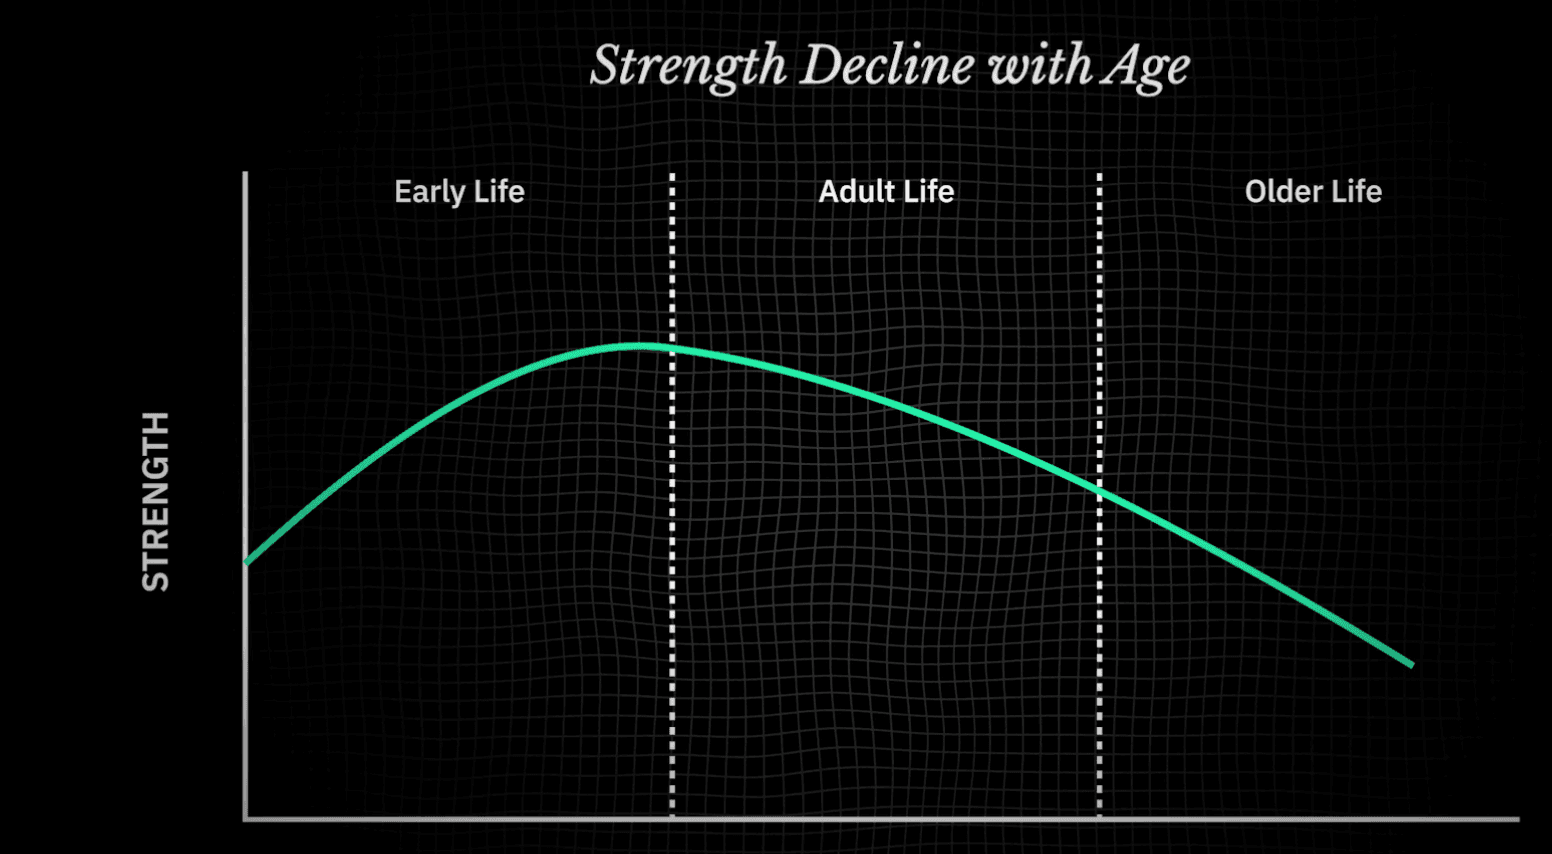 Strength train harder as you get older